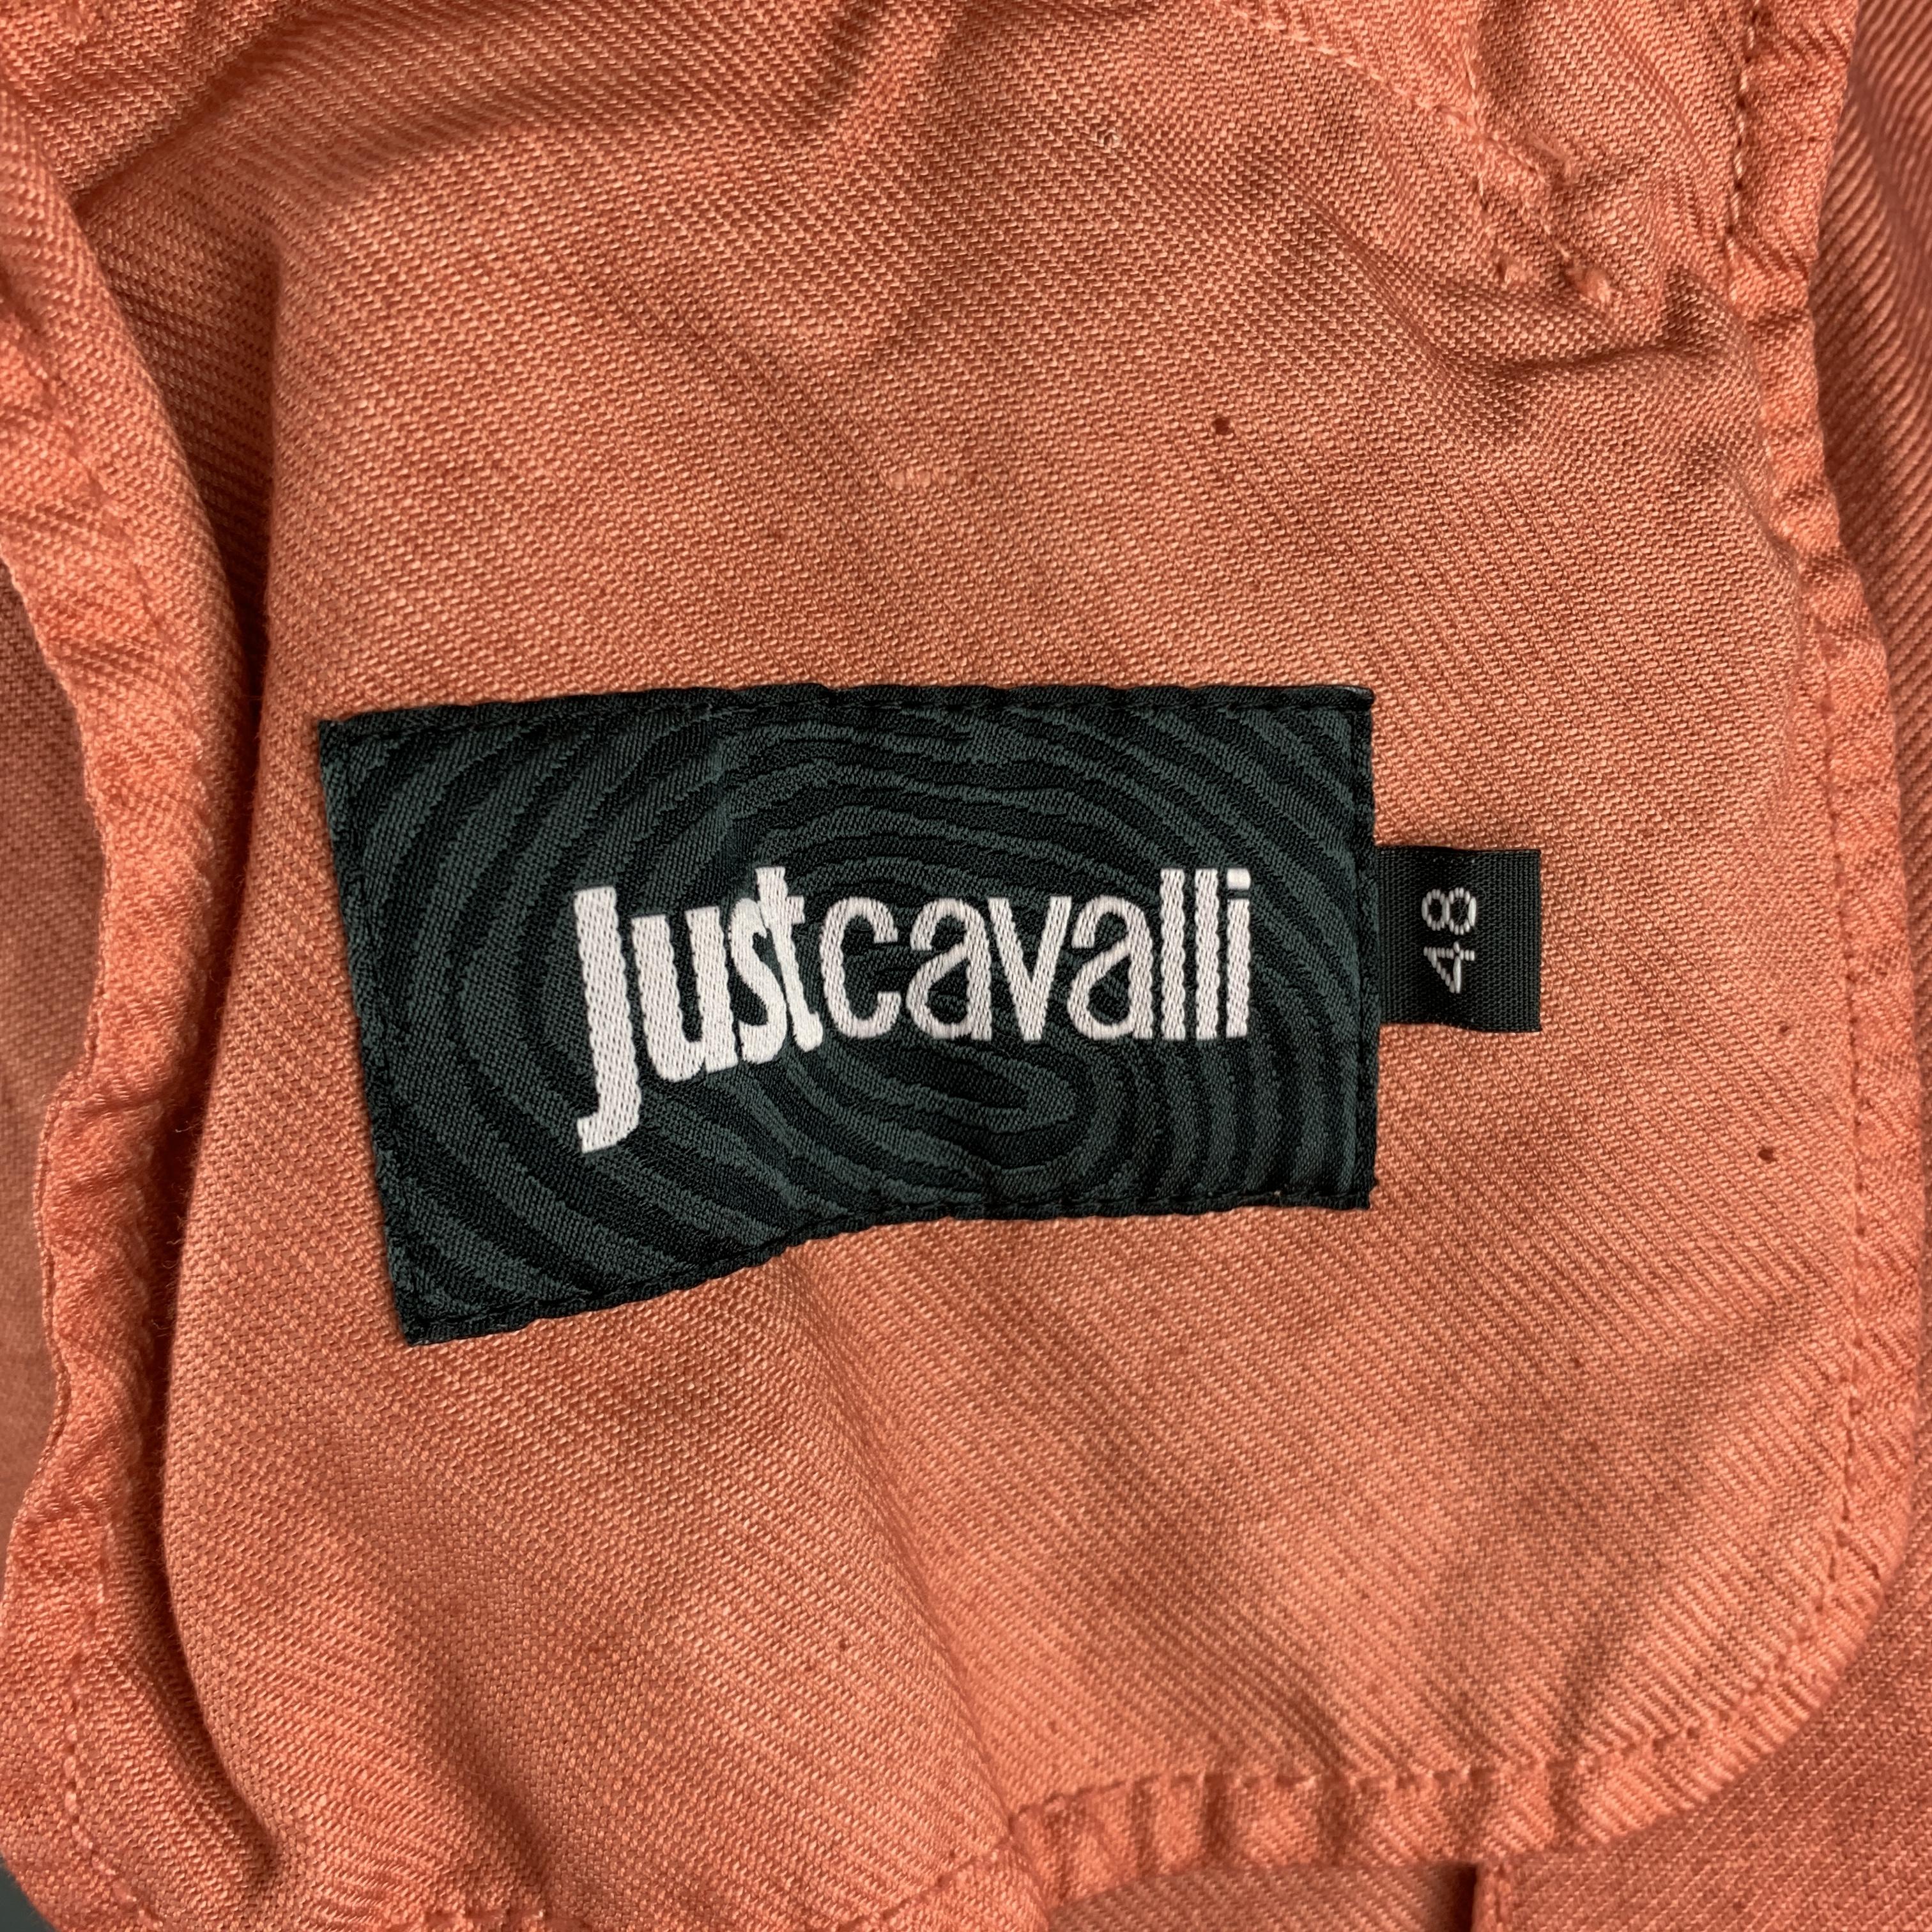 JUST CAVALLI Washed Brick Red Cotton / Linen Notch Lapel Sport Coat 5